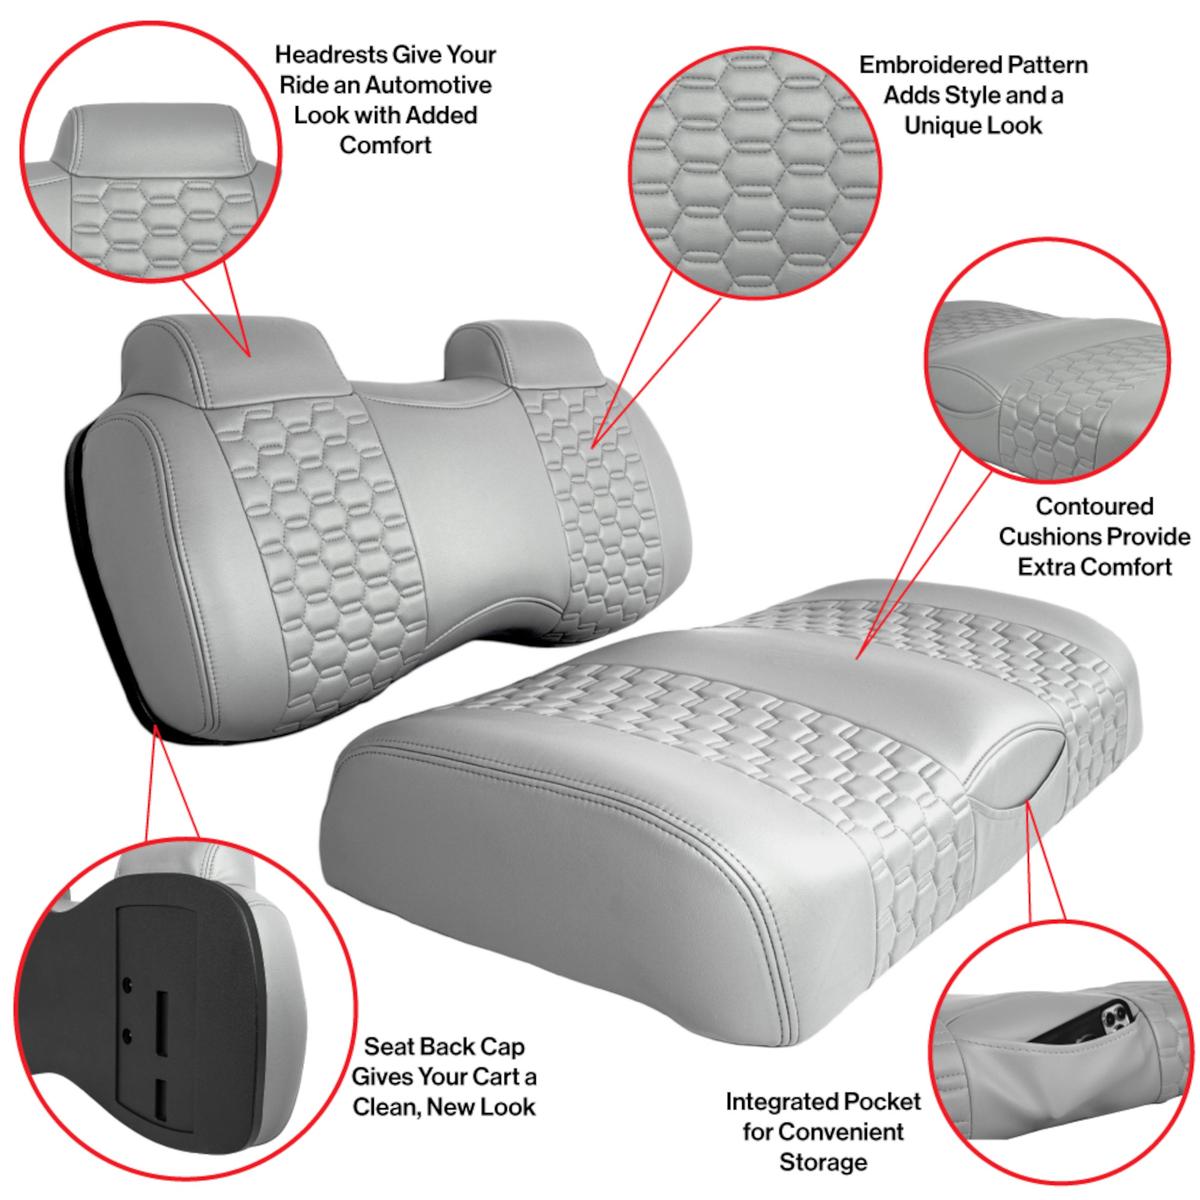 MadJax® Colorado Seats for Yamaha G29/Drive/Drive2 – White